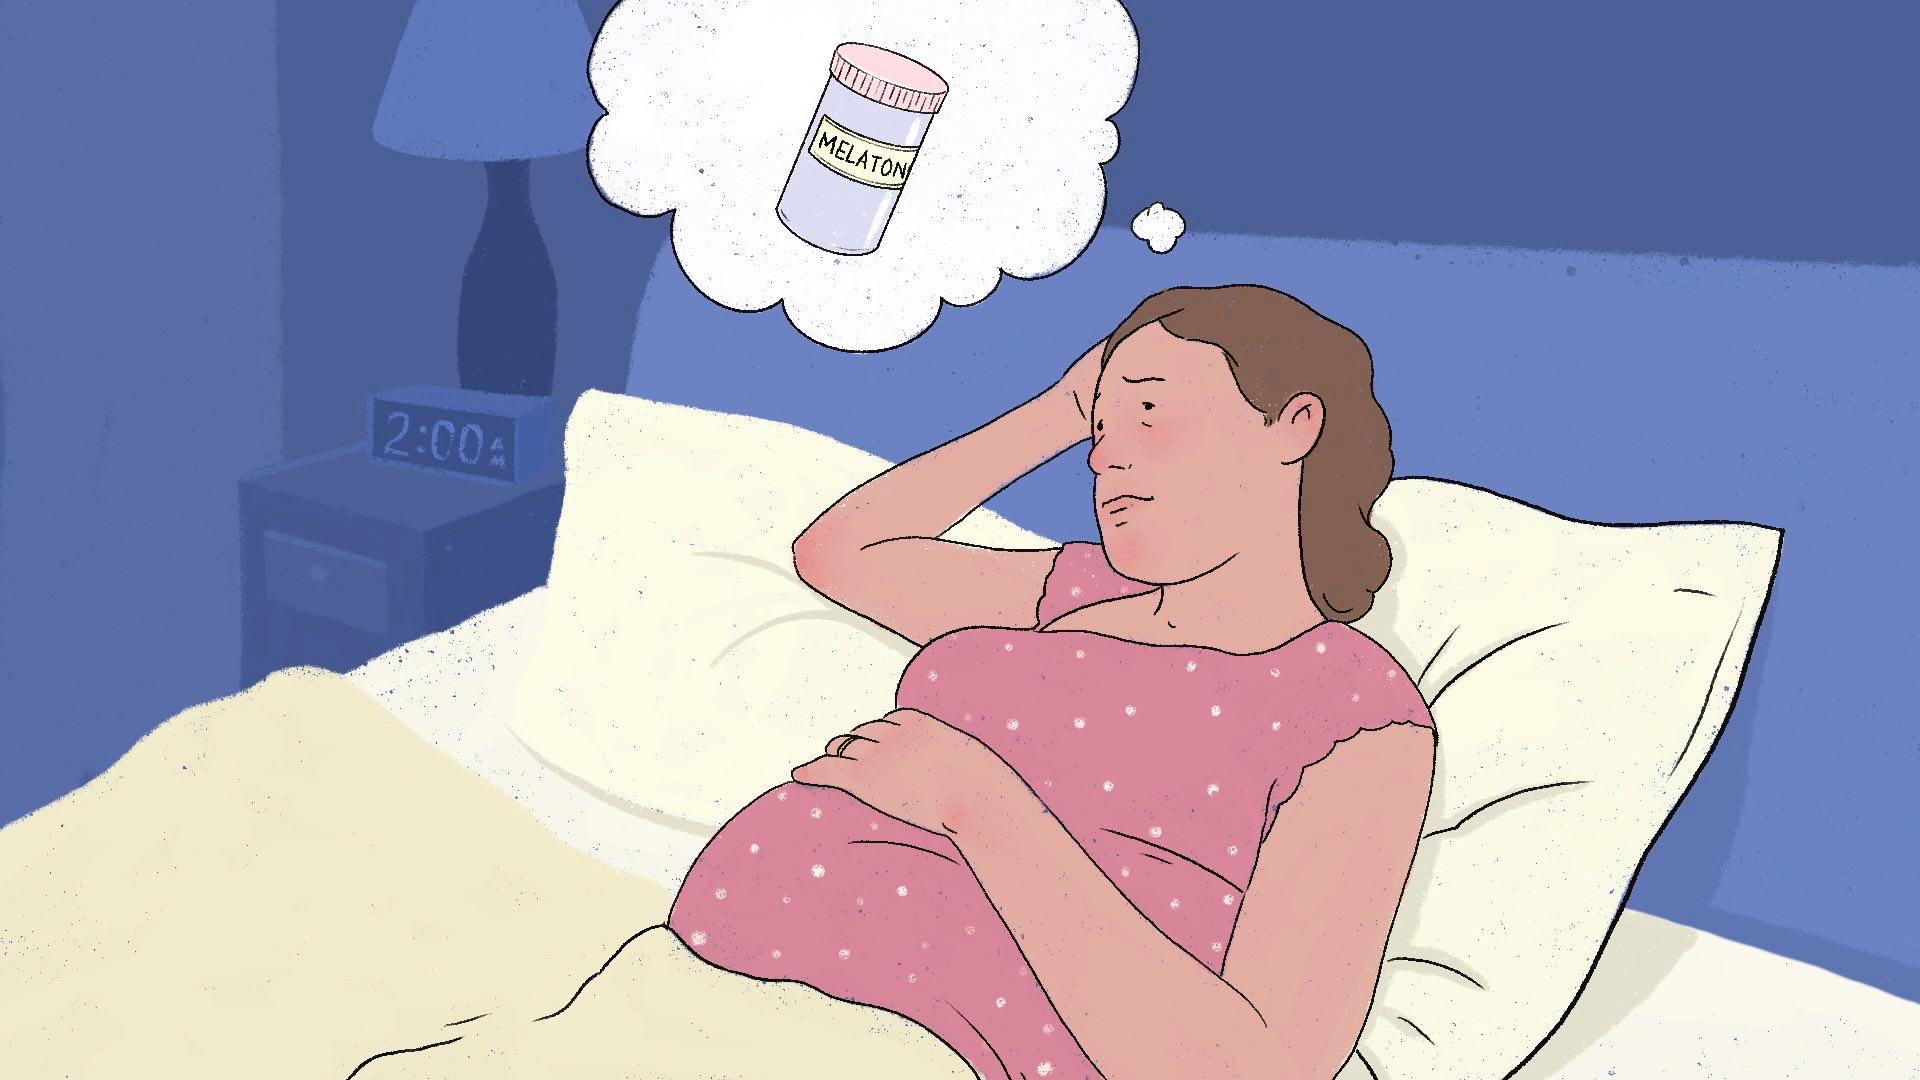 Can you take melatonin while pregnant?